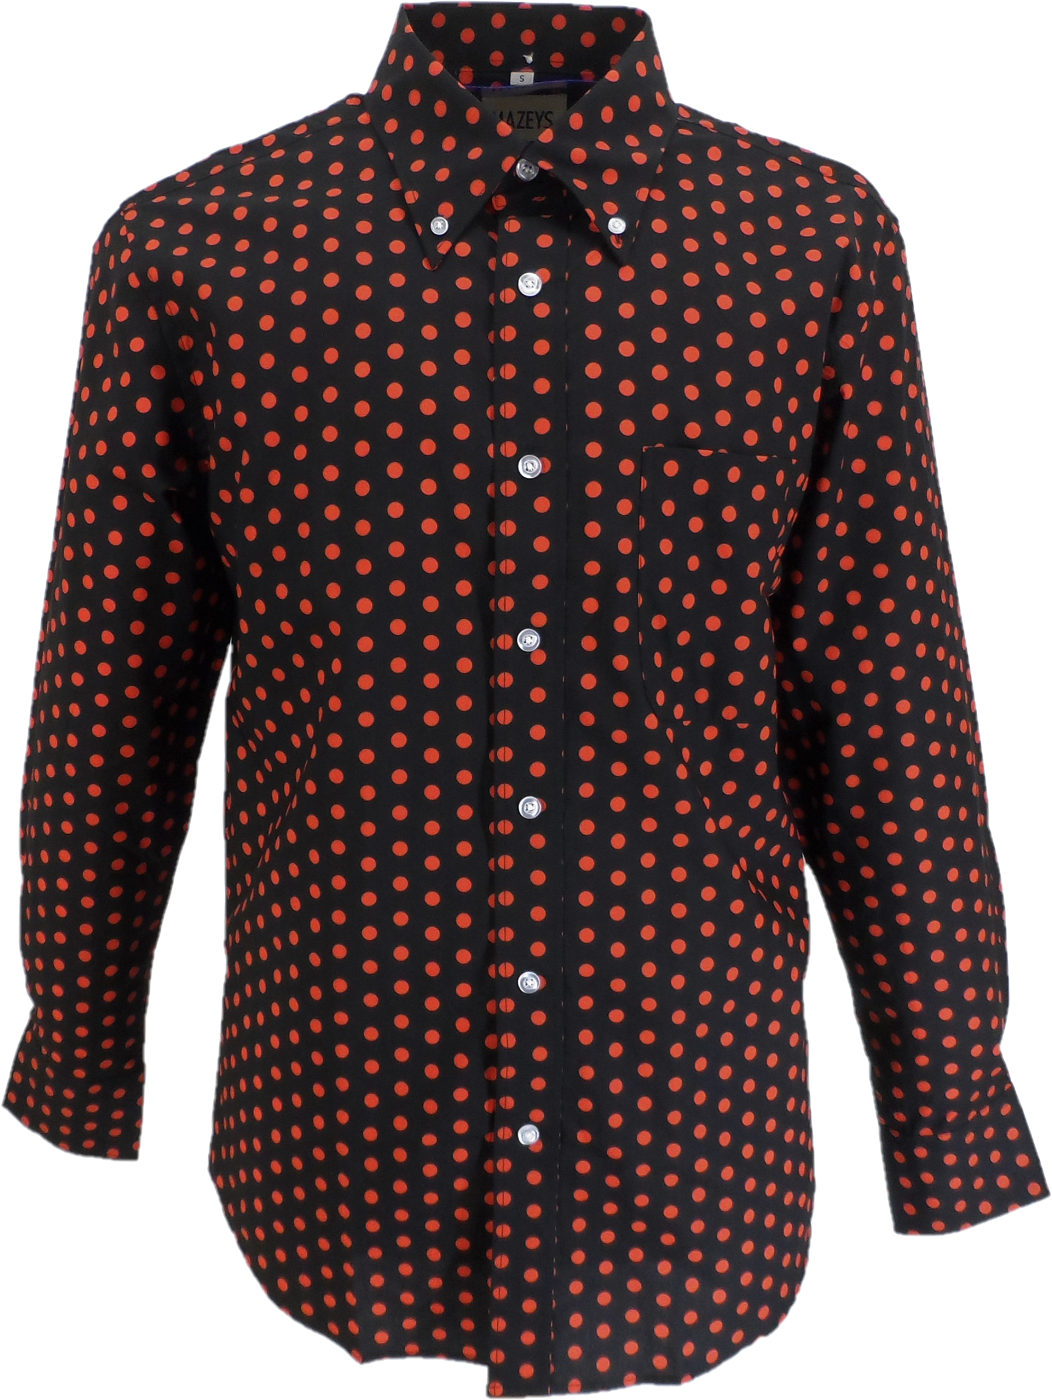 Mazeys Mens Red and Black Retro Mod Polka Dot 100% Cotton Shirts XXX Large / Red